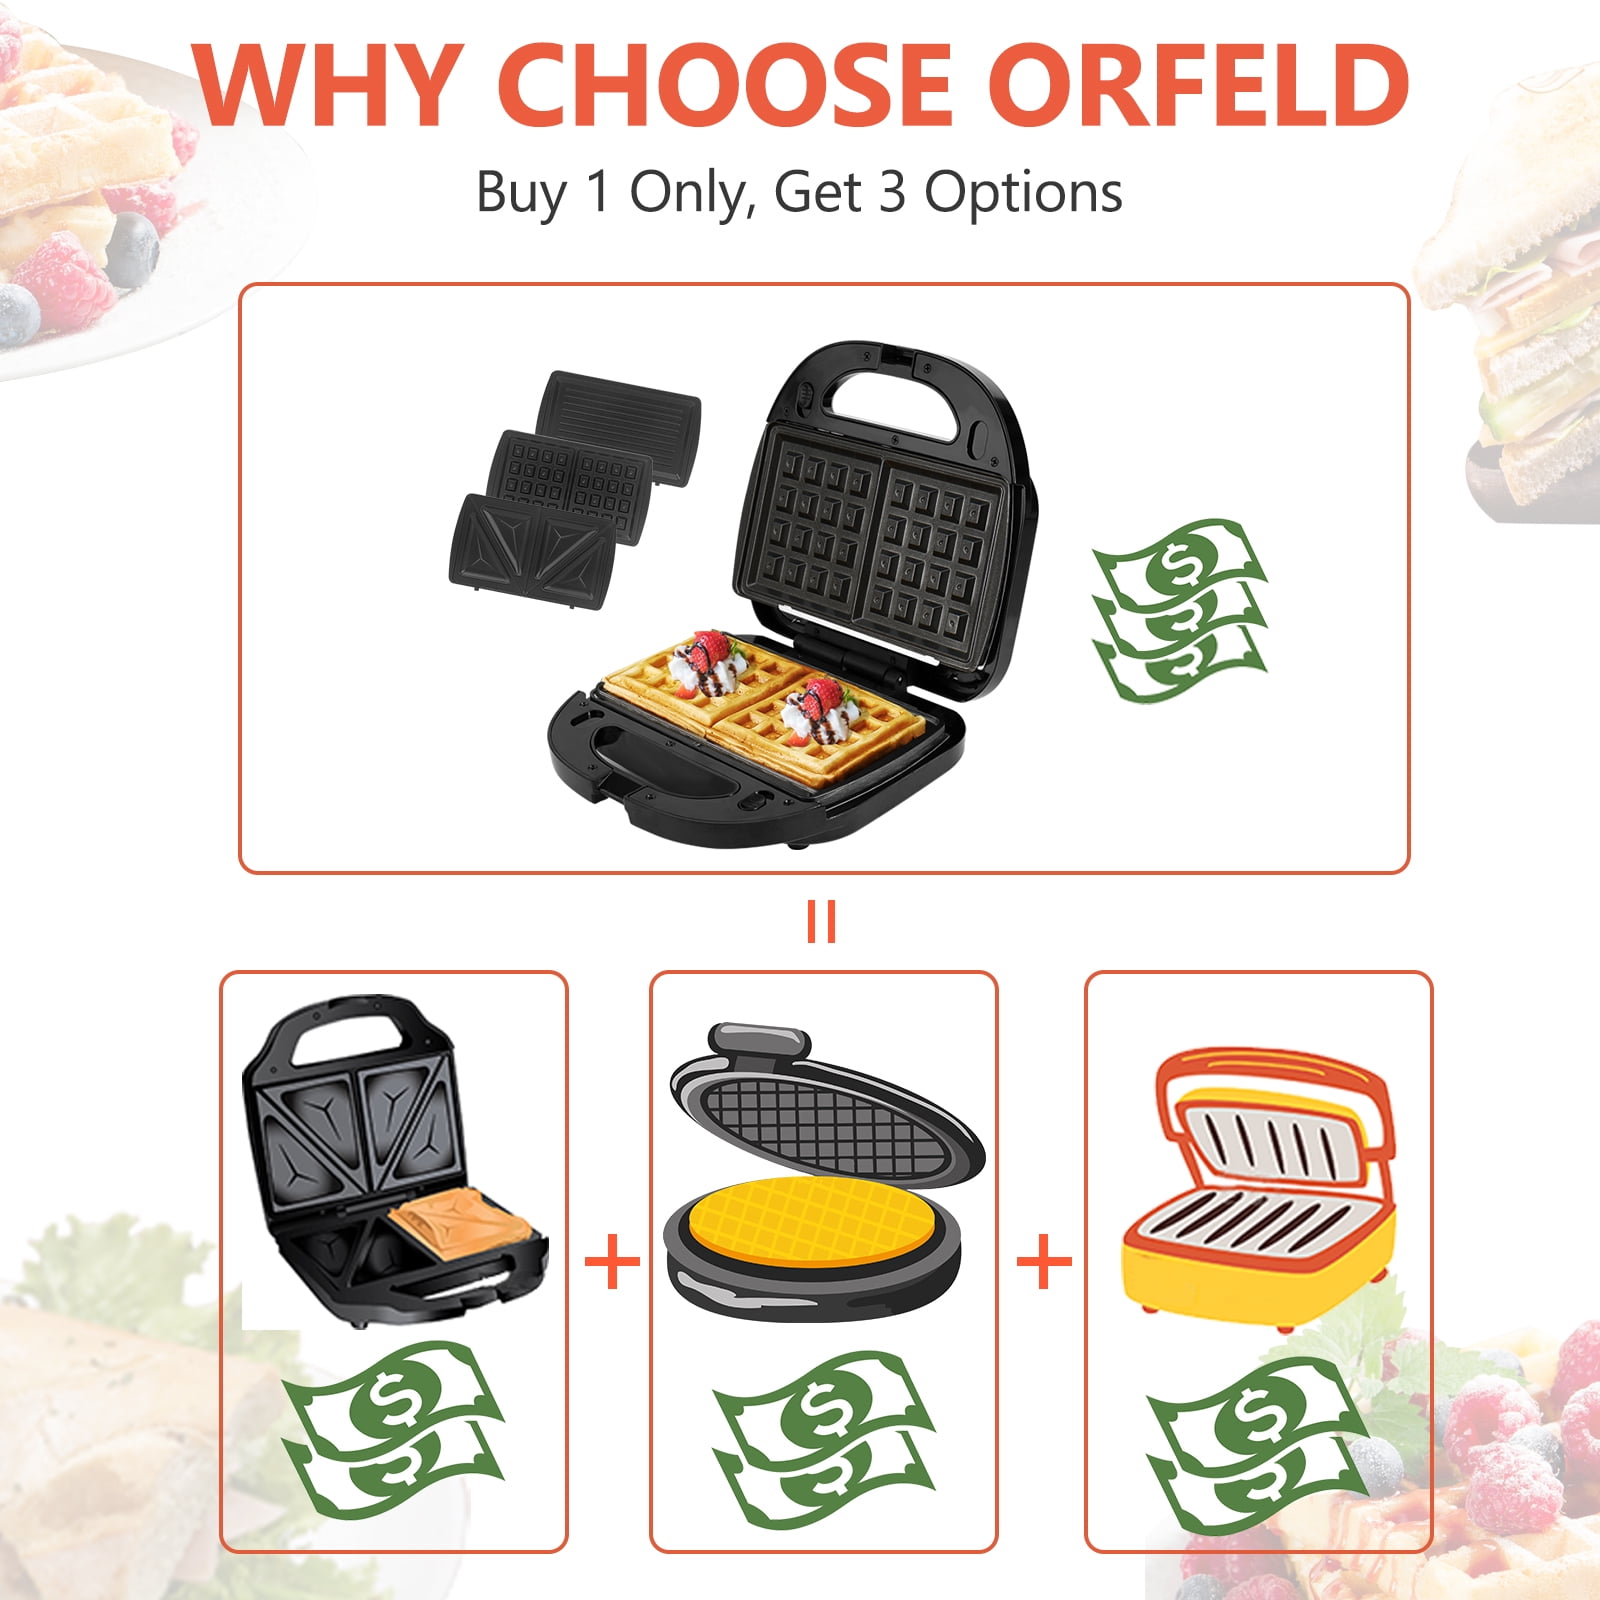 ORFELD Sandwich Maker, Panini Press Grill, 750 Watt 3 In 1 Waffle Maker Detachable Non-Stick Coating with Led Indicator Lights - 3